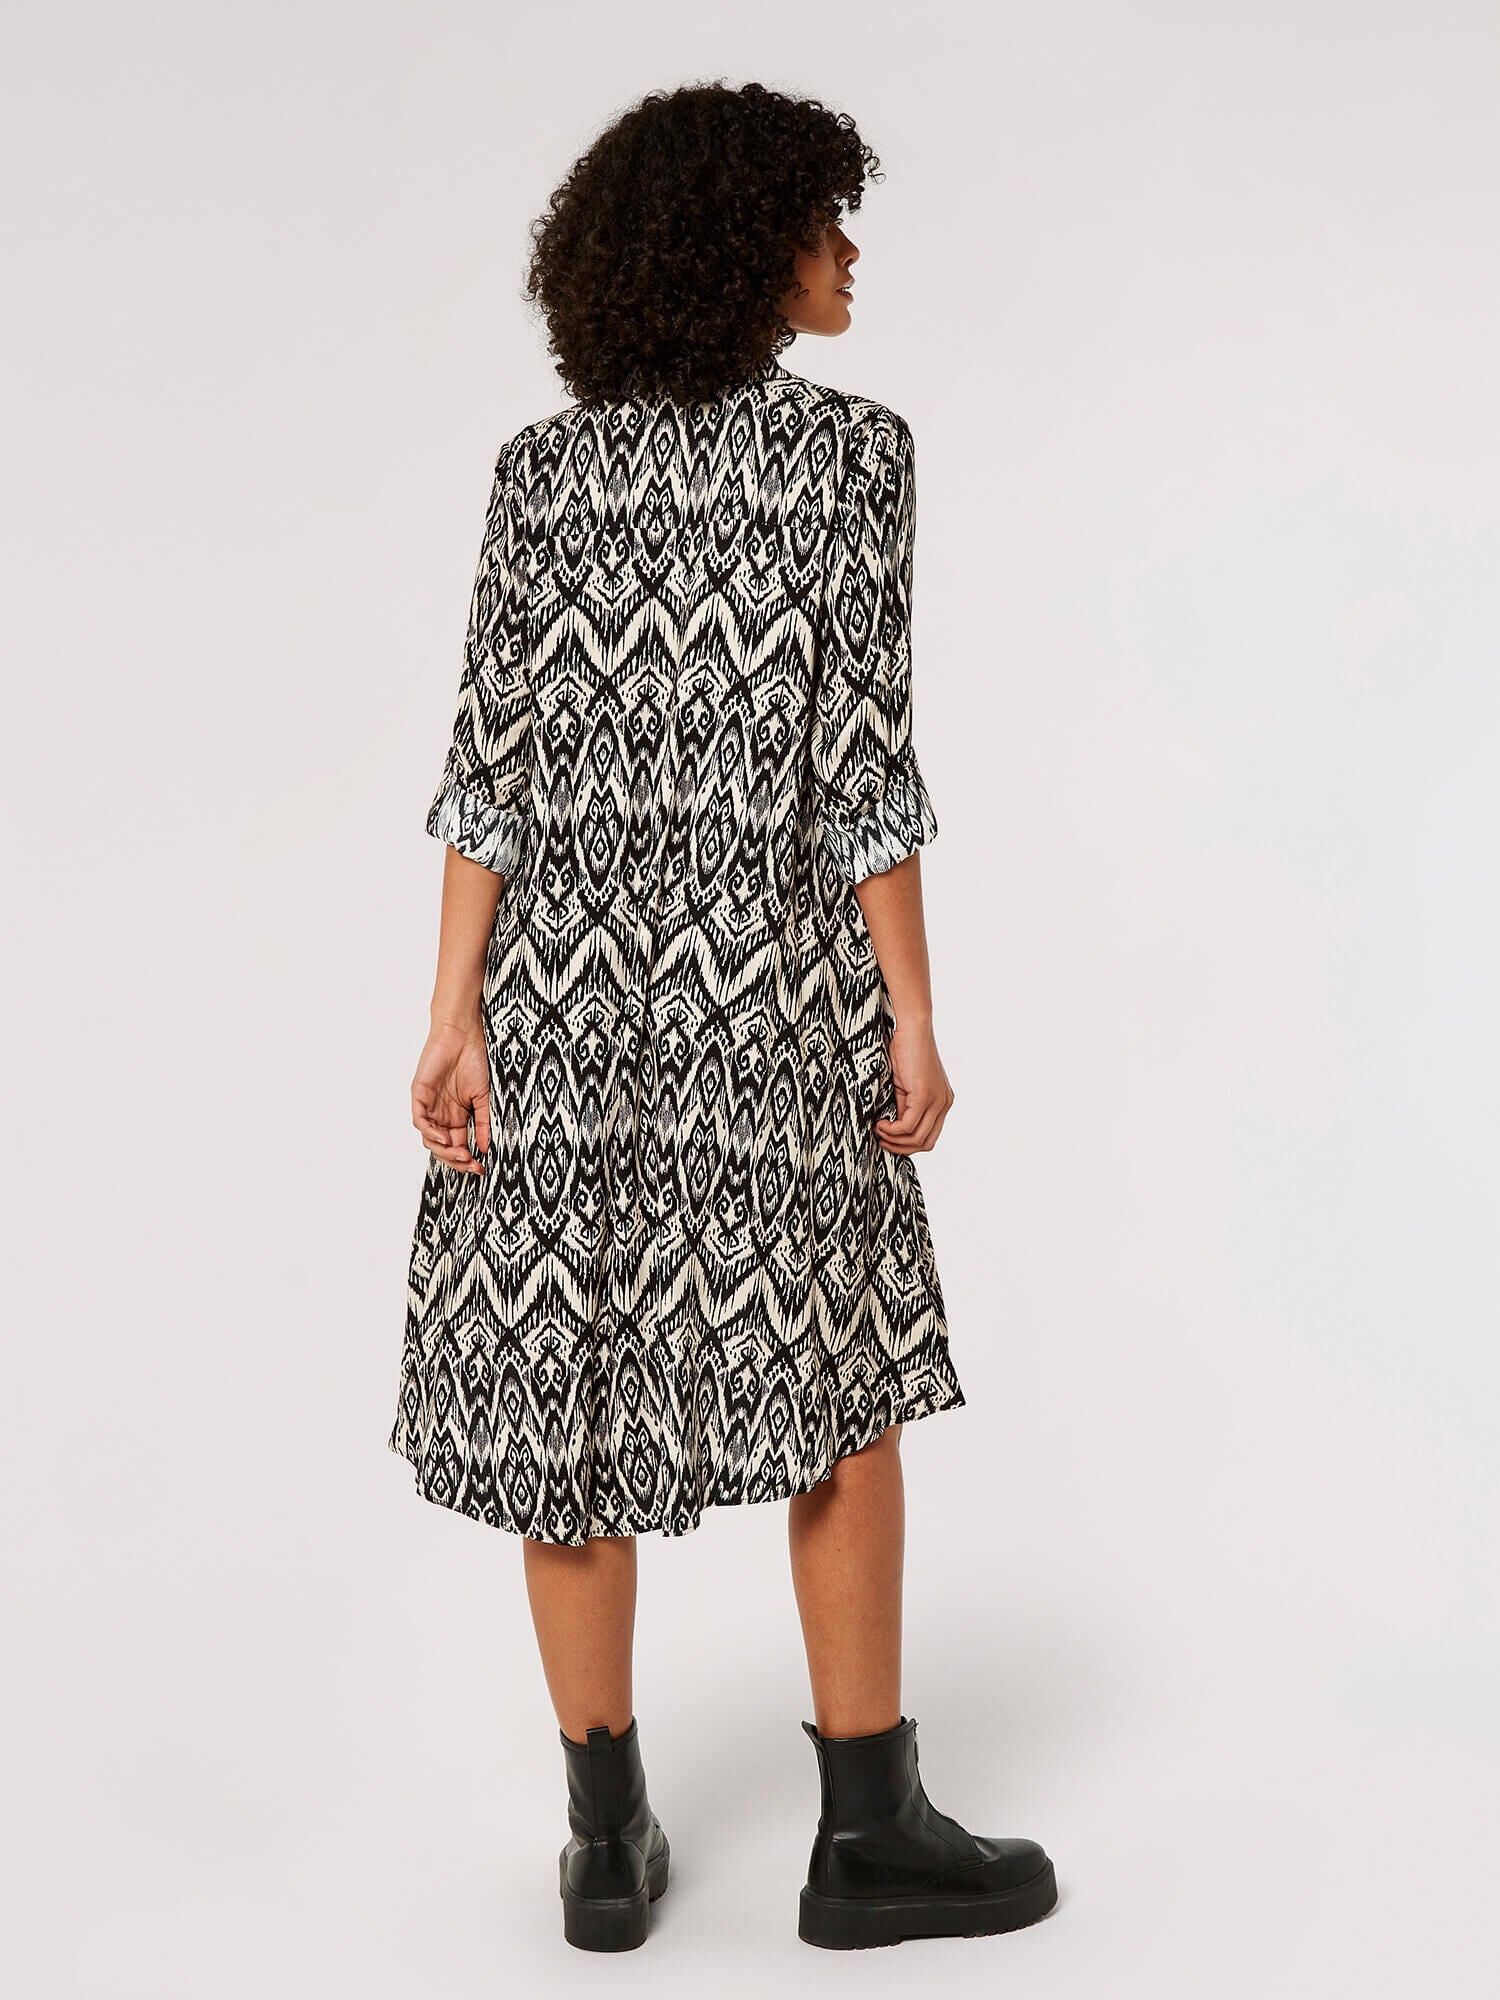 Long Sleeve Aztec Print High Low Shirt Dress in Black Multi